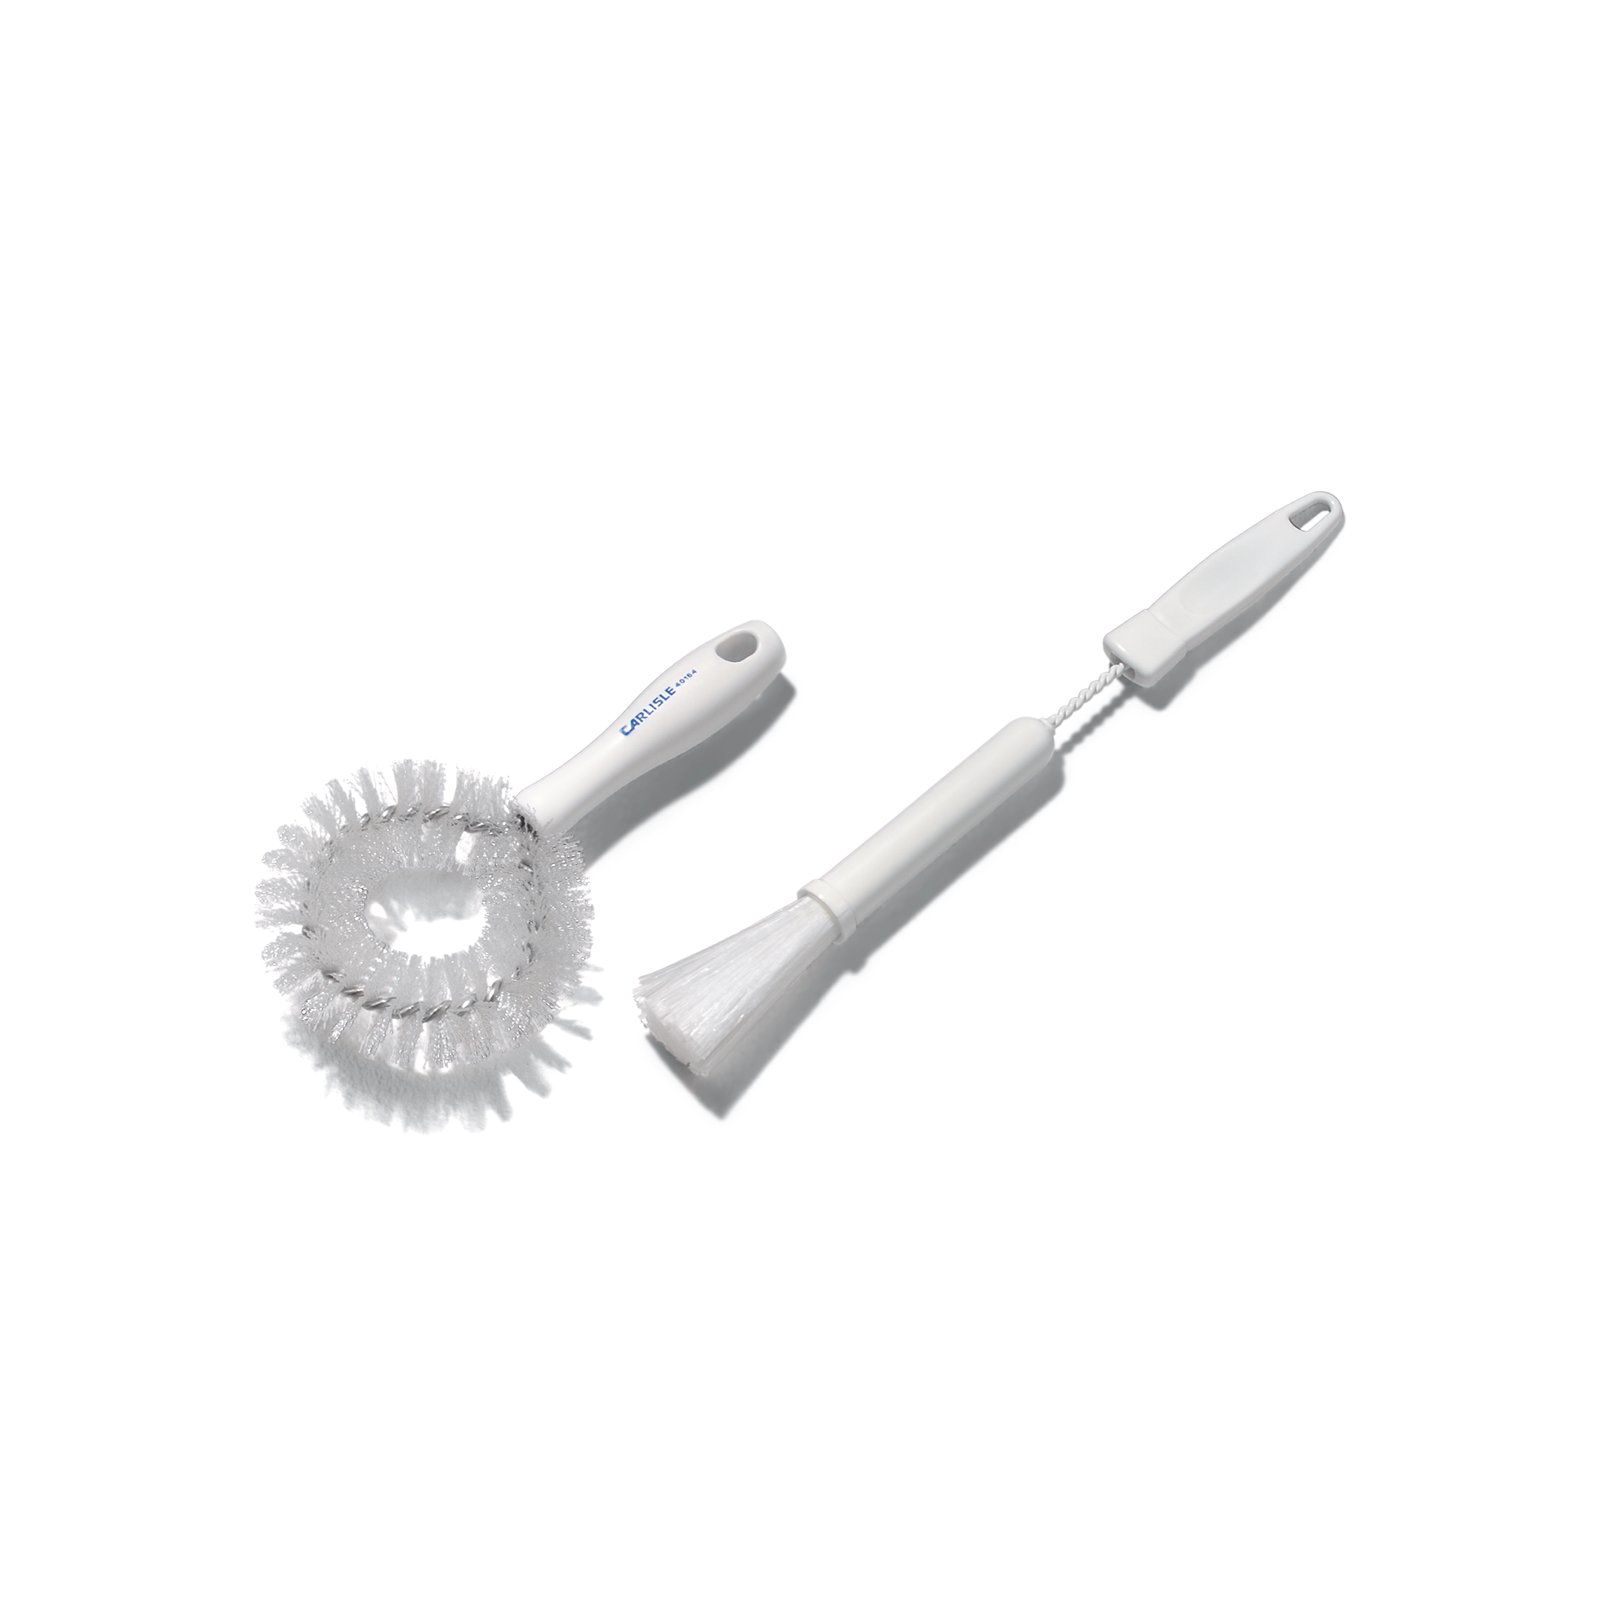 4016402 - Sparta® Vegetable Brush with Stiff Polyester Bristles 8.75 -  White